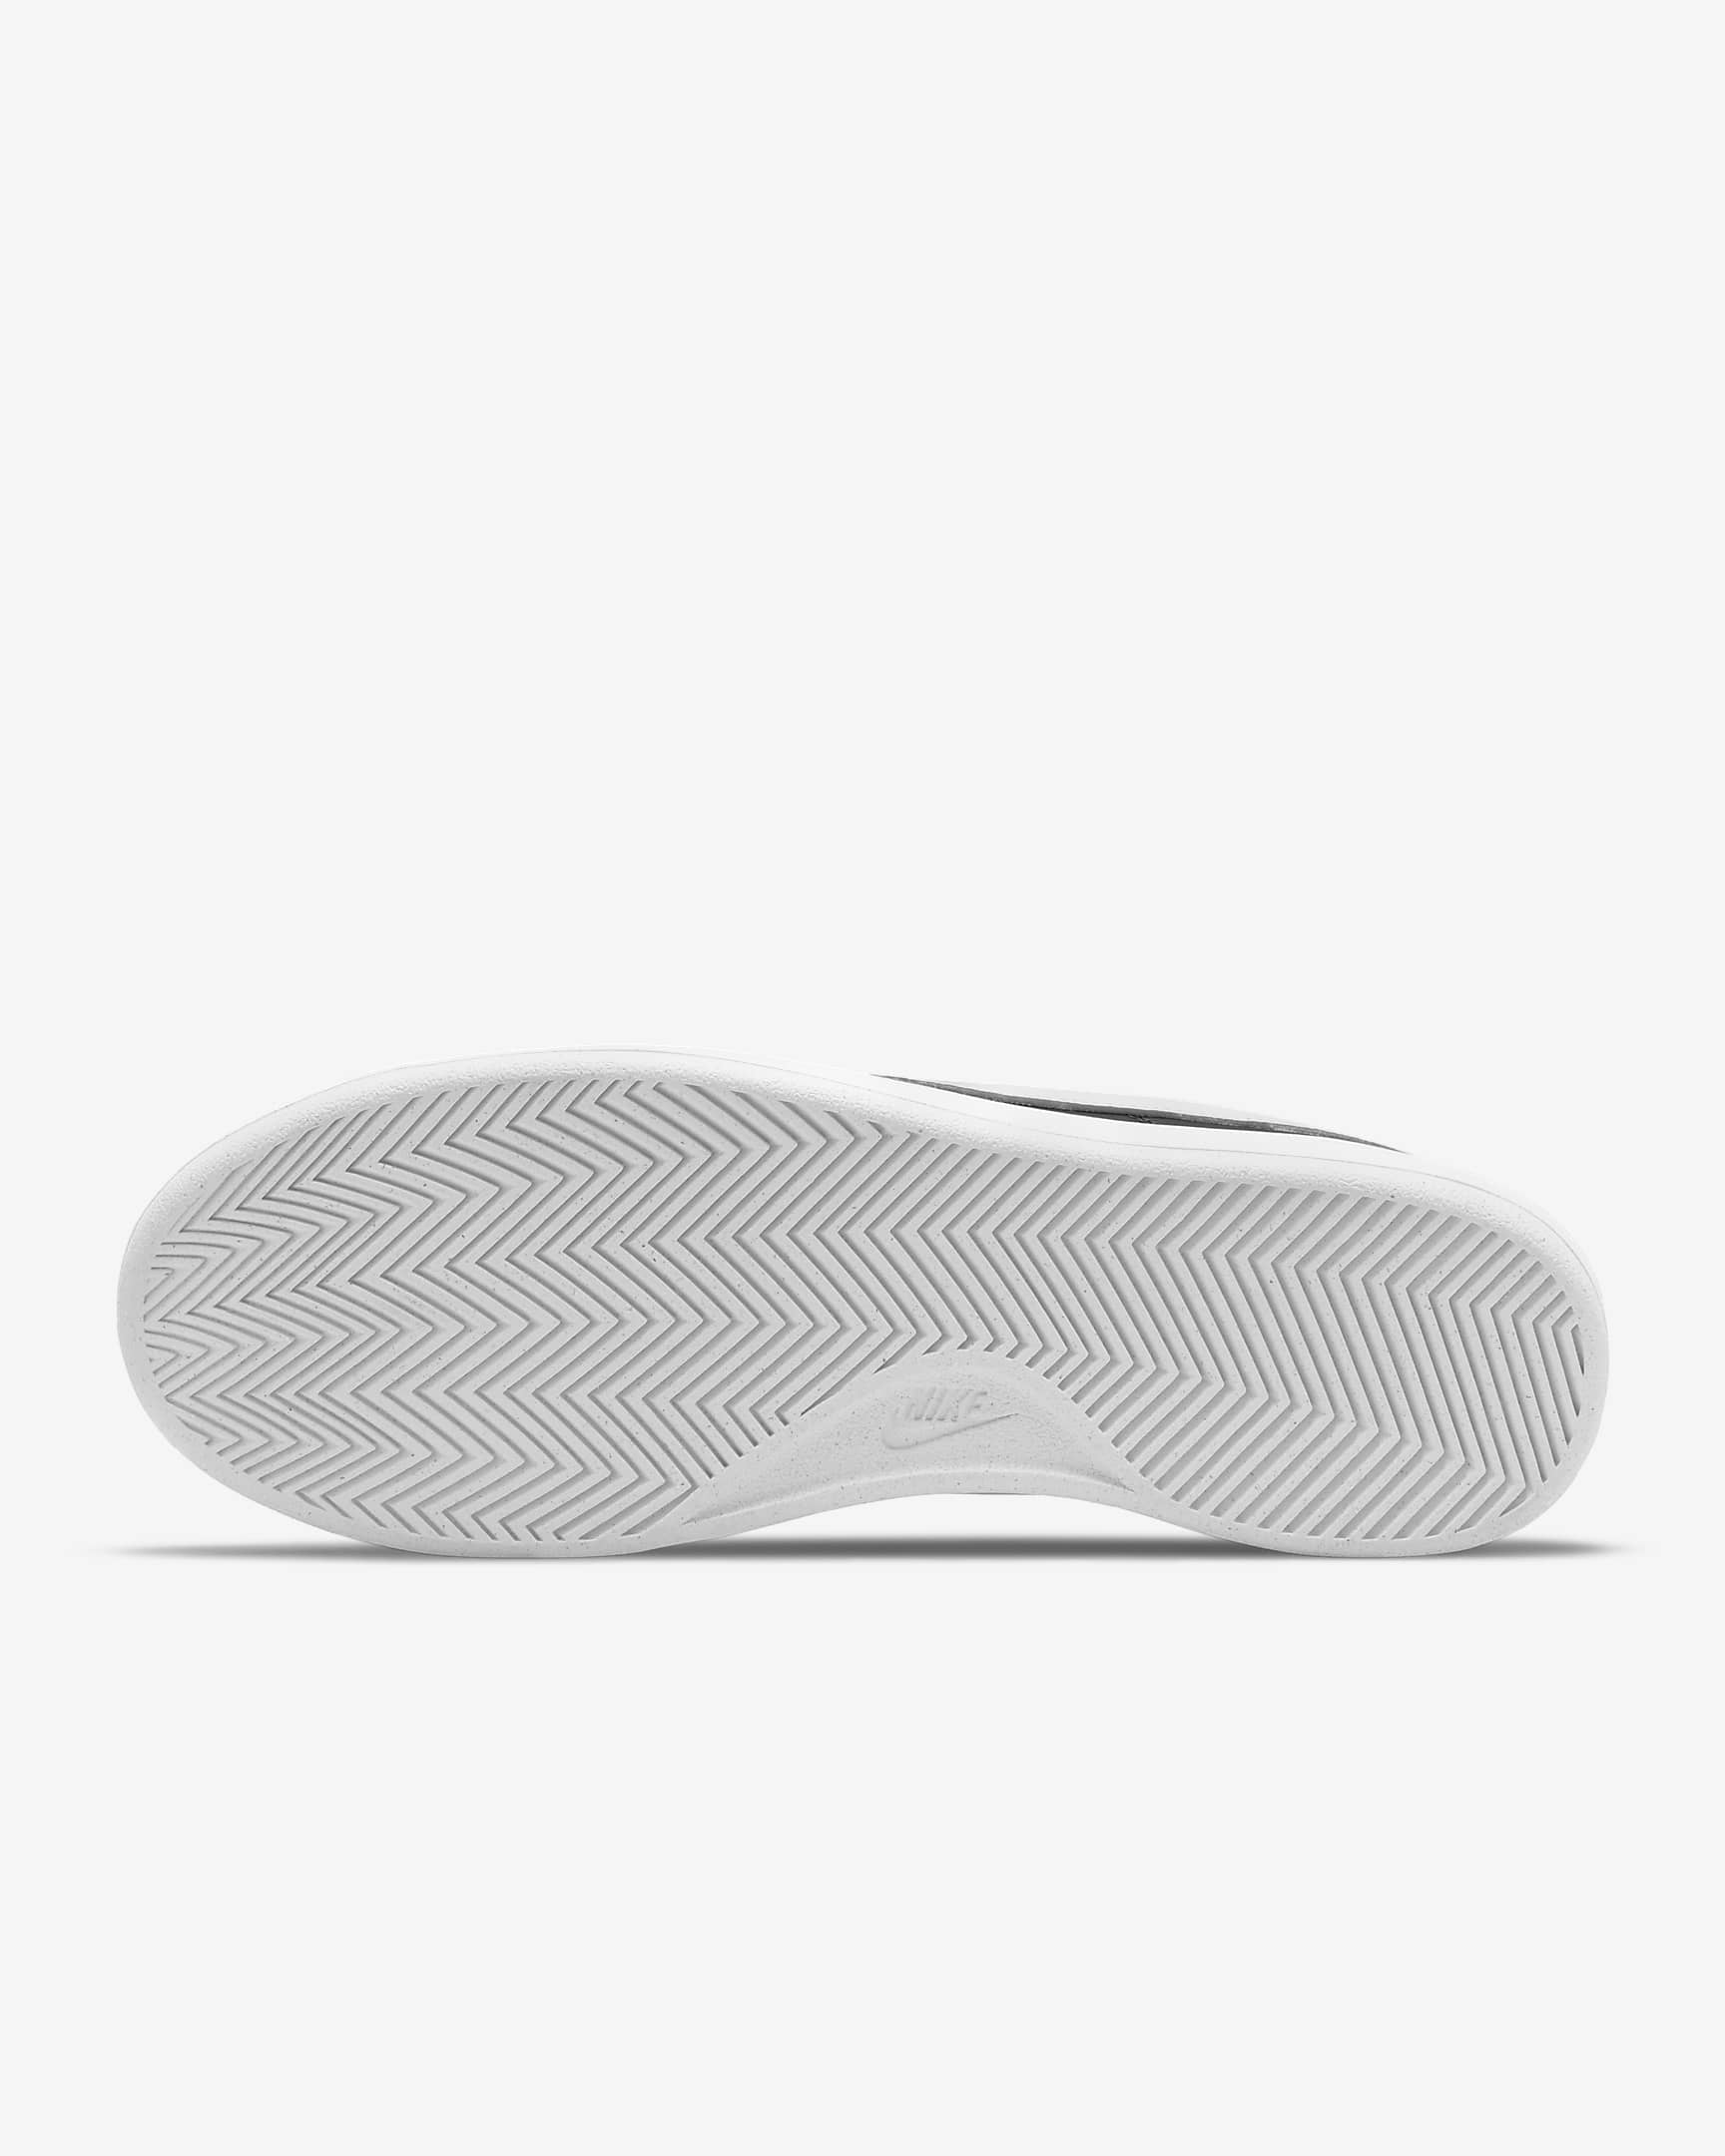 NikeCourt Royale 2 Next Nature Men's Shoes - Black/White